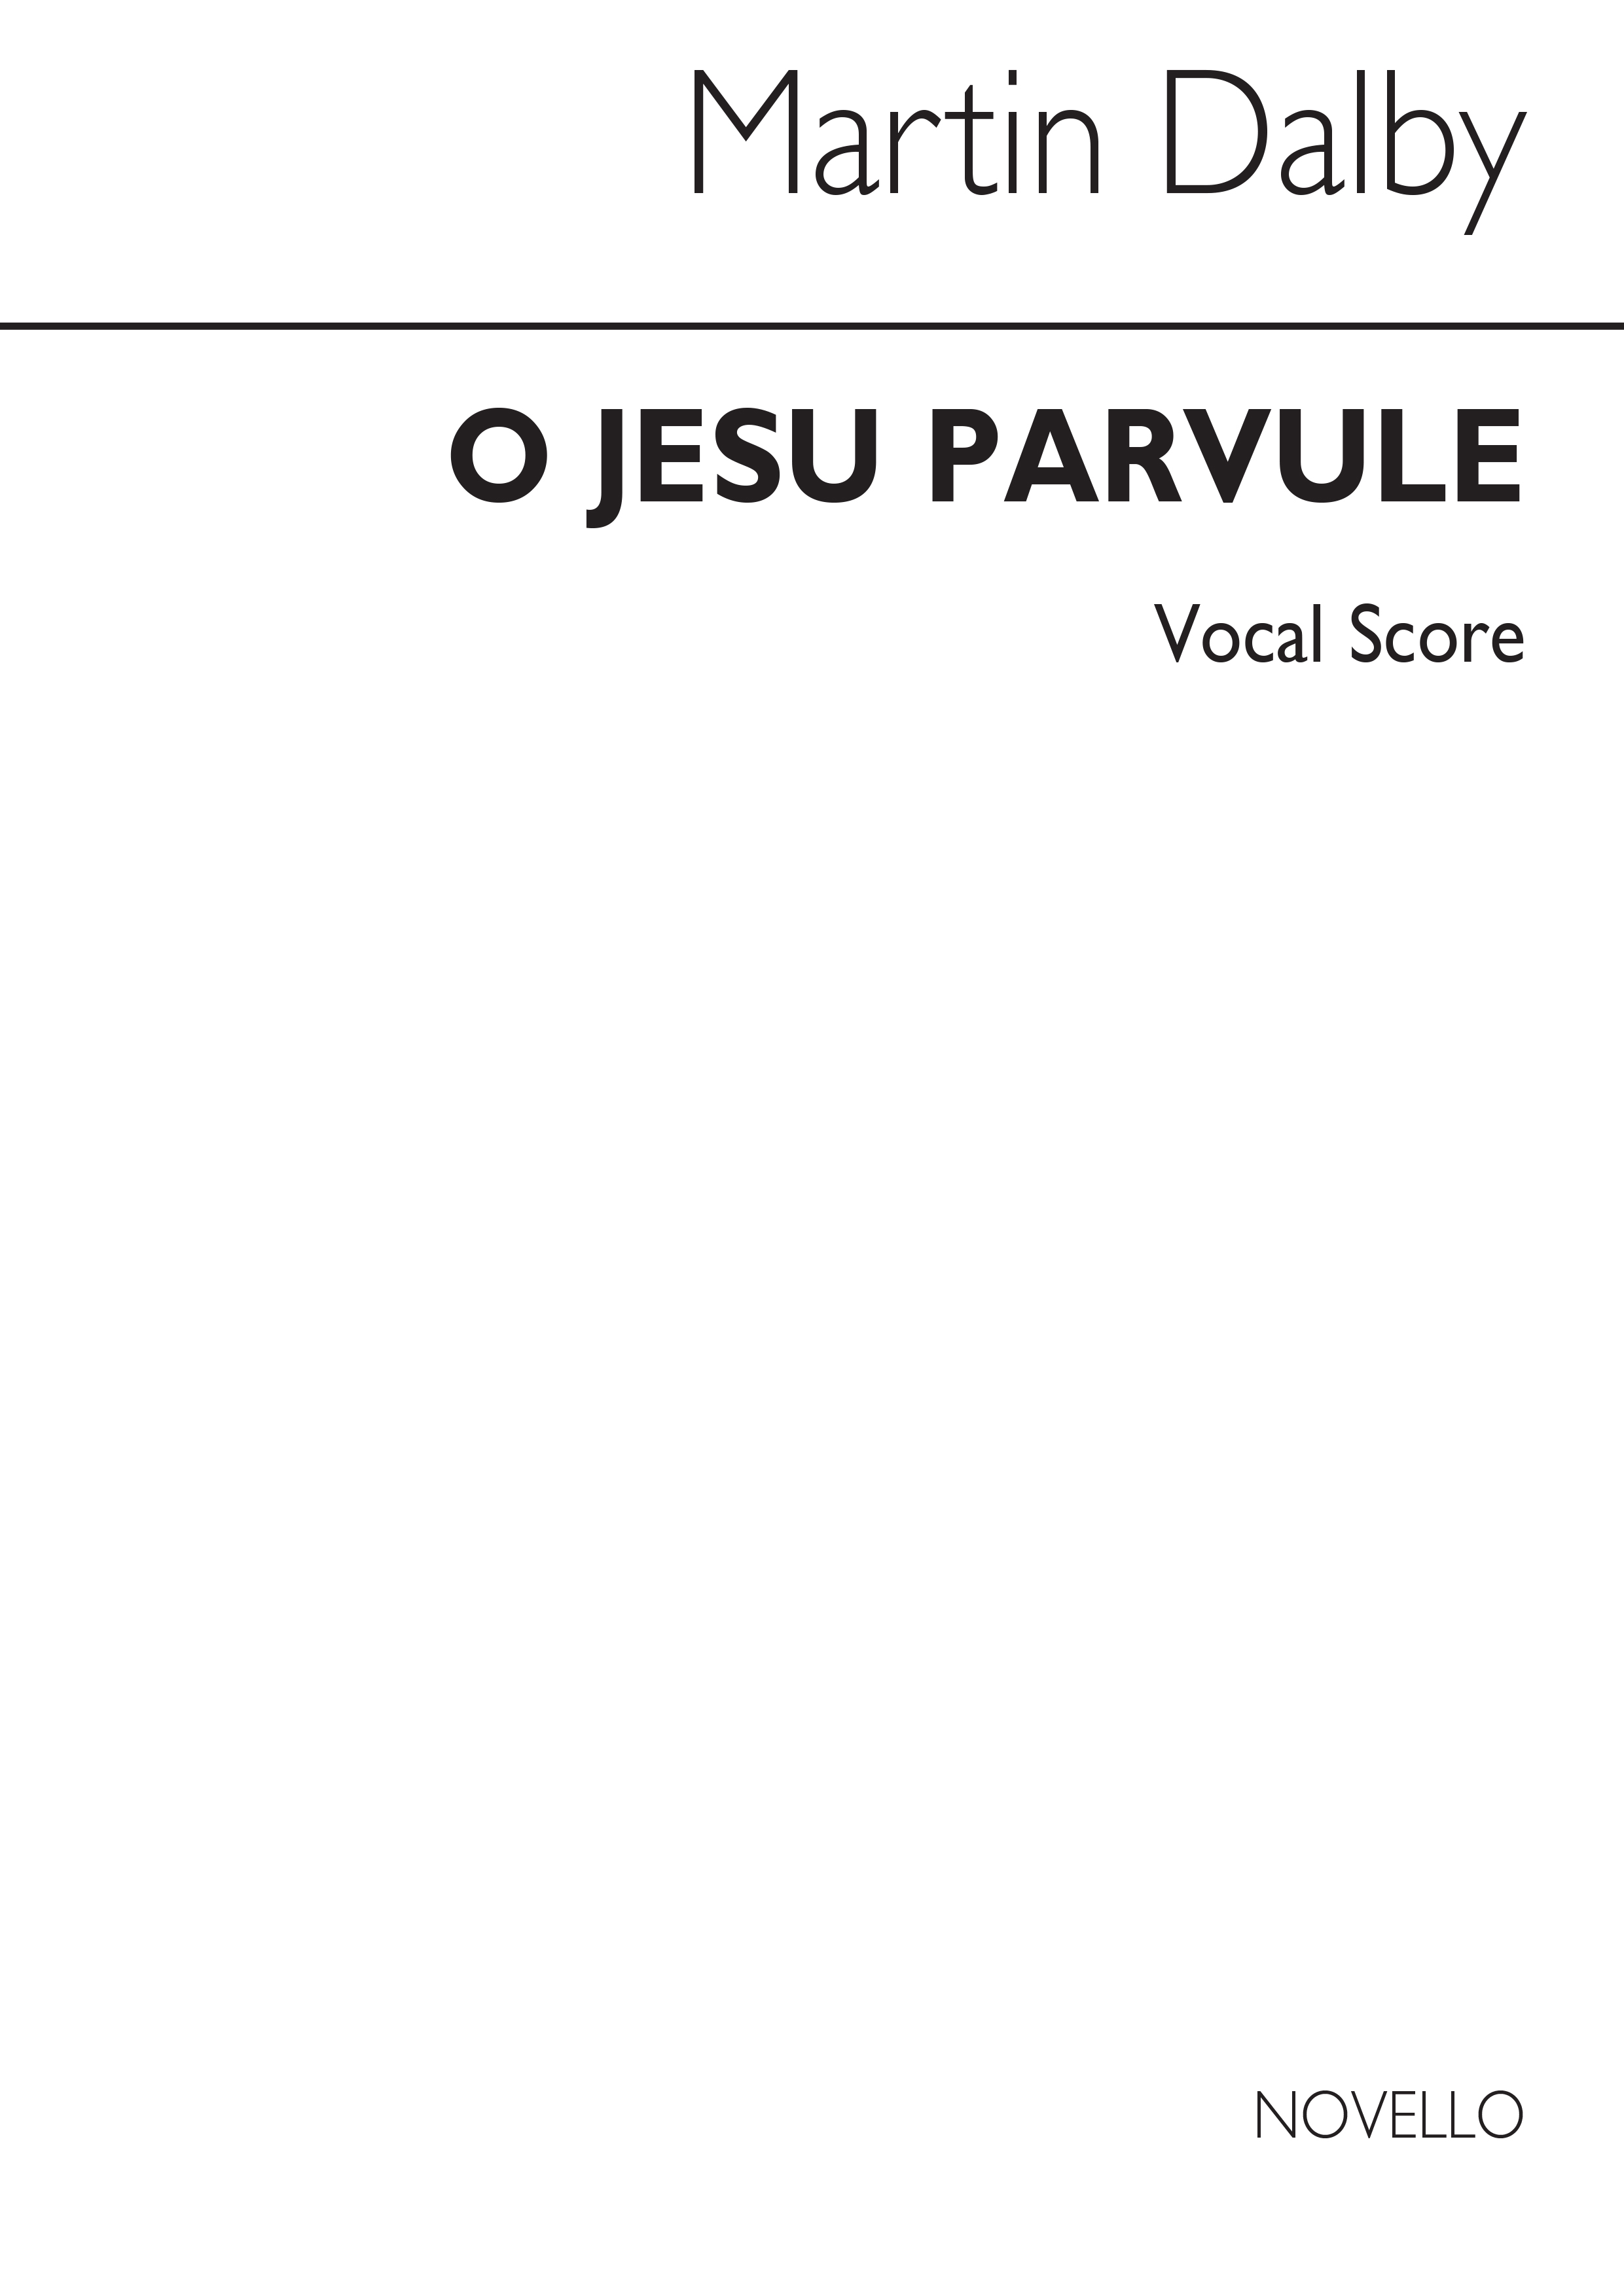 Dalby: O Jesu Parvule for SATB Chorus